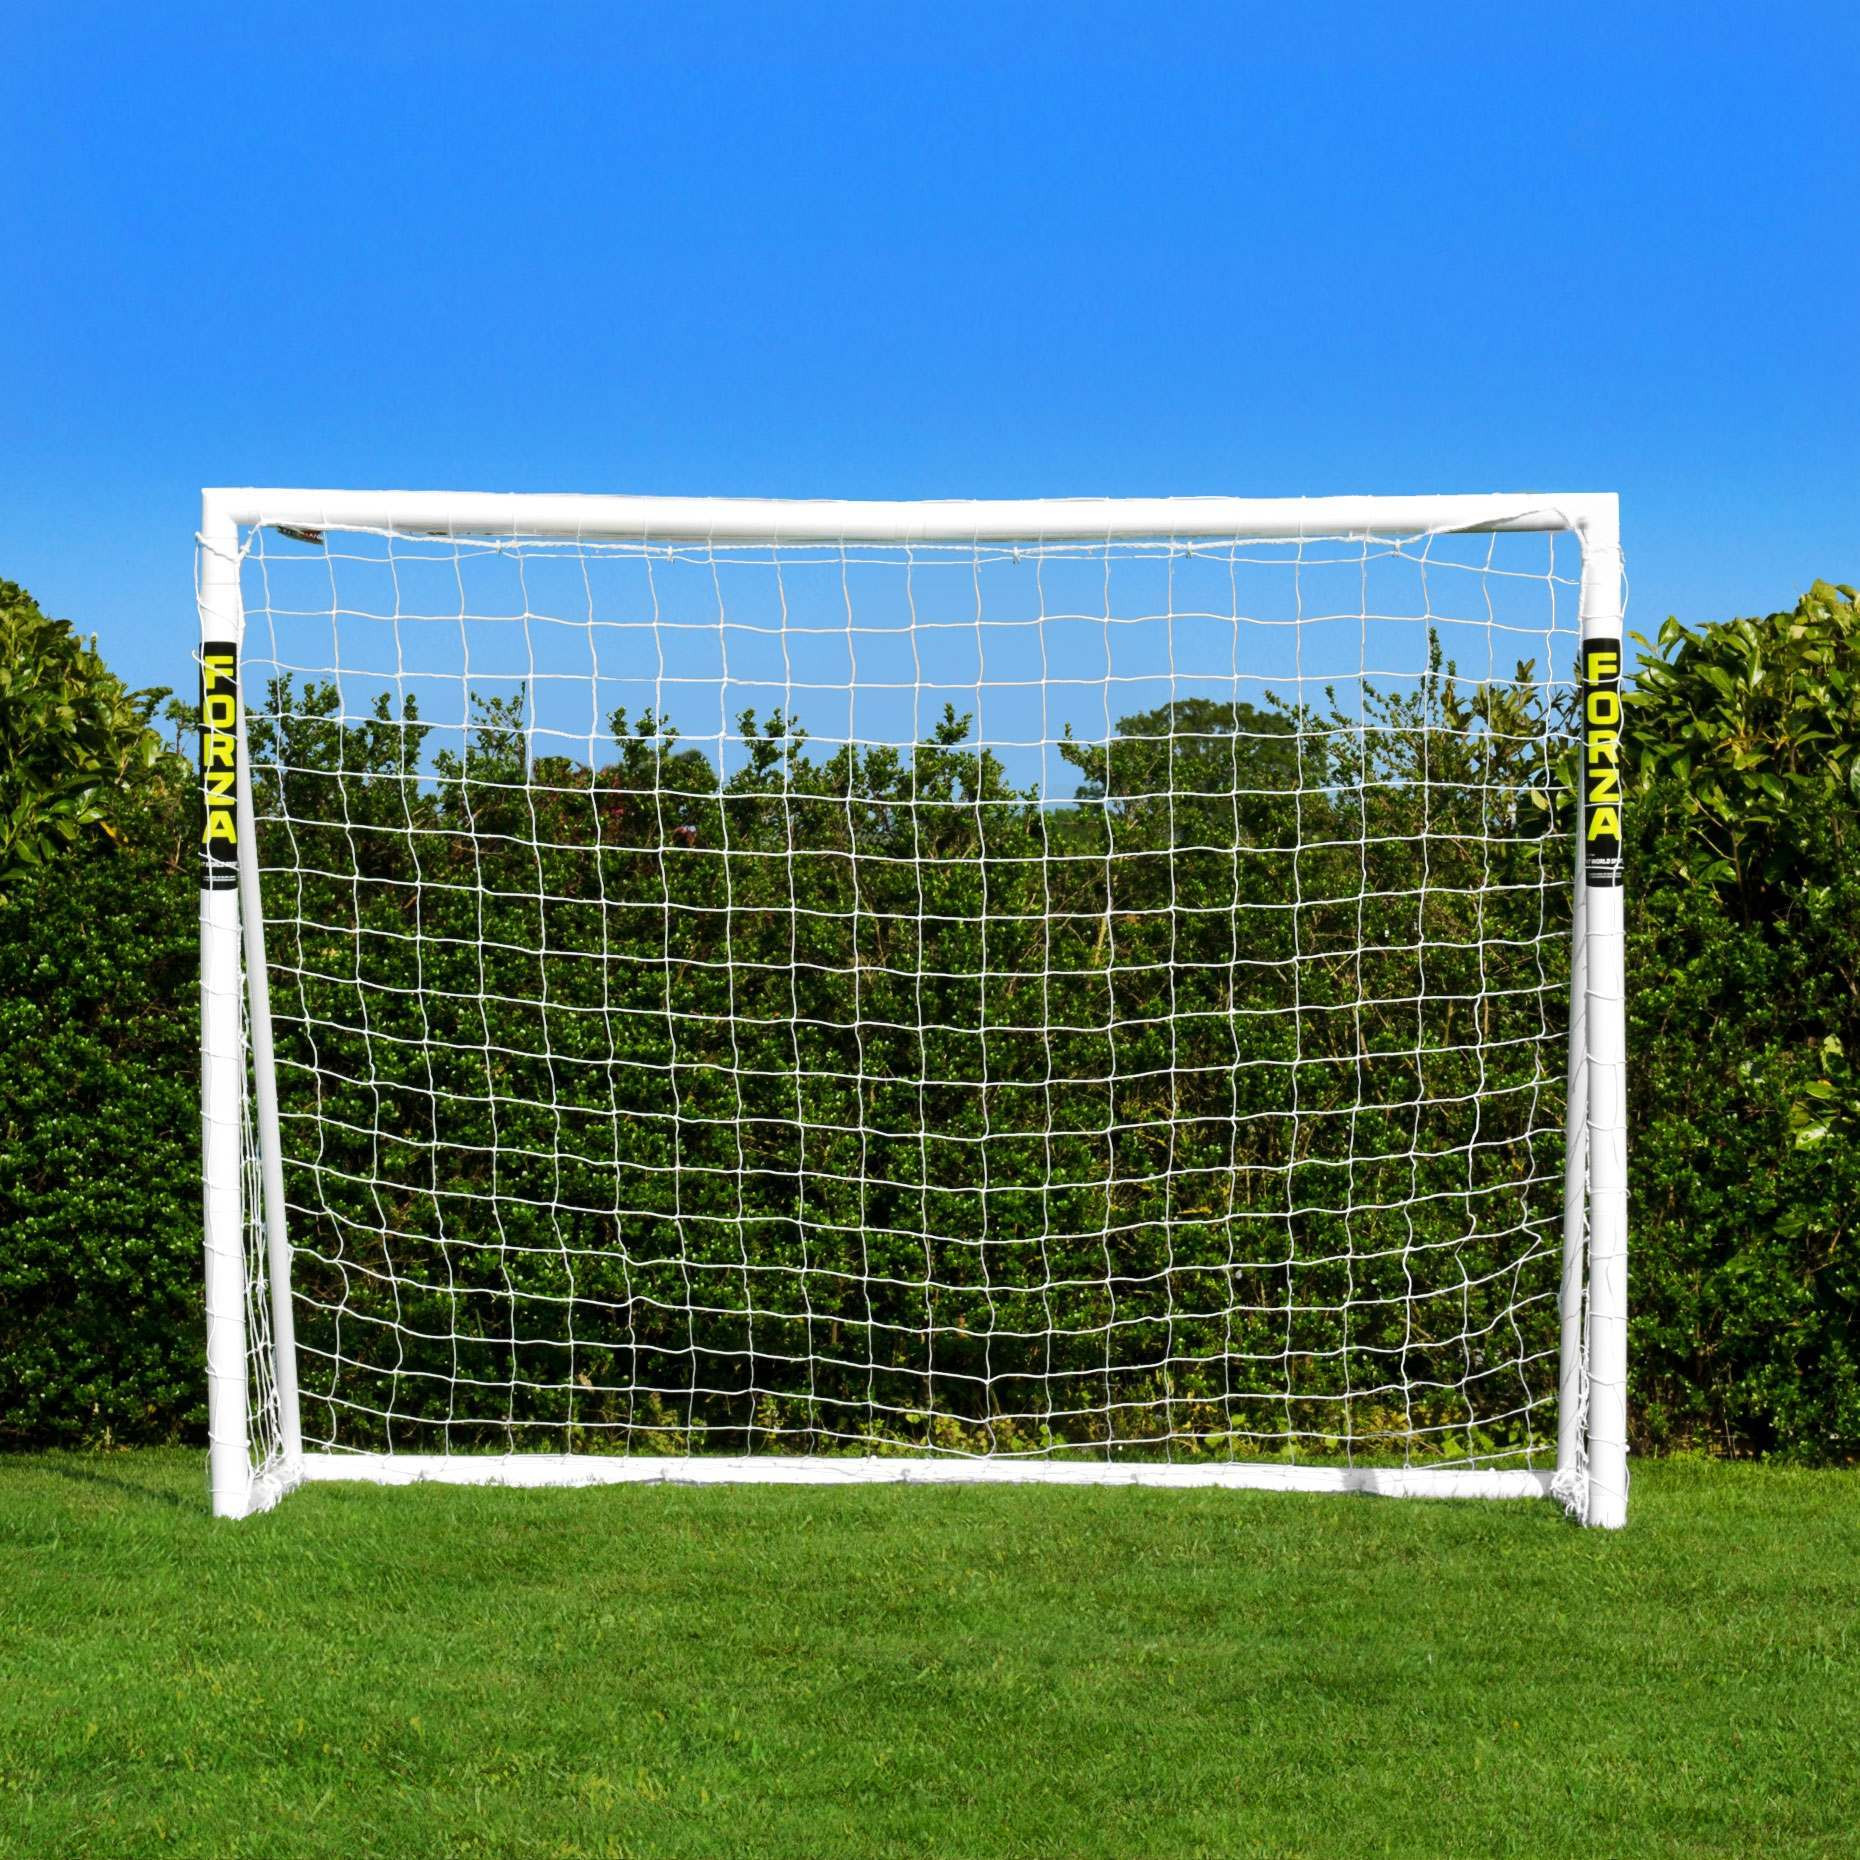 Backyard Football Goal Post
 8 x 6 FORZA Soccer Goal Post Soccer Goals